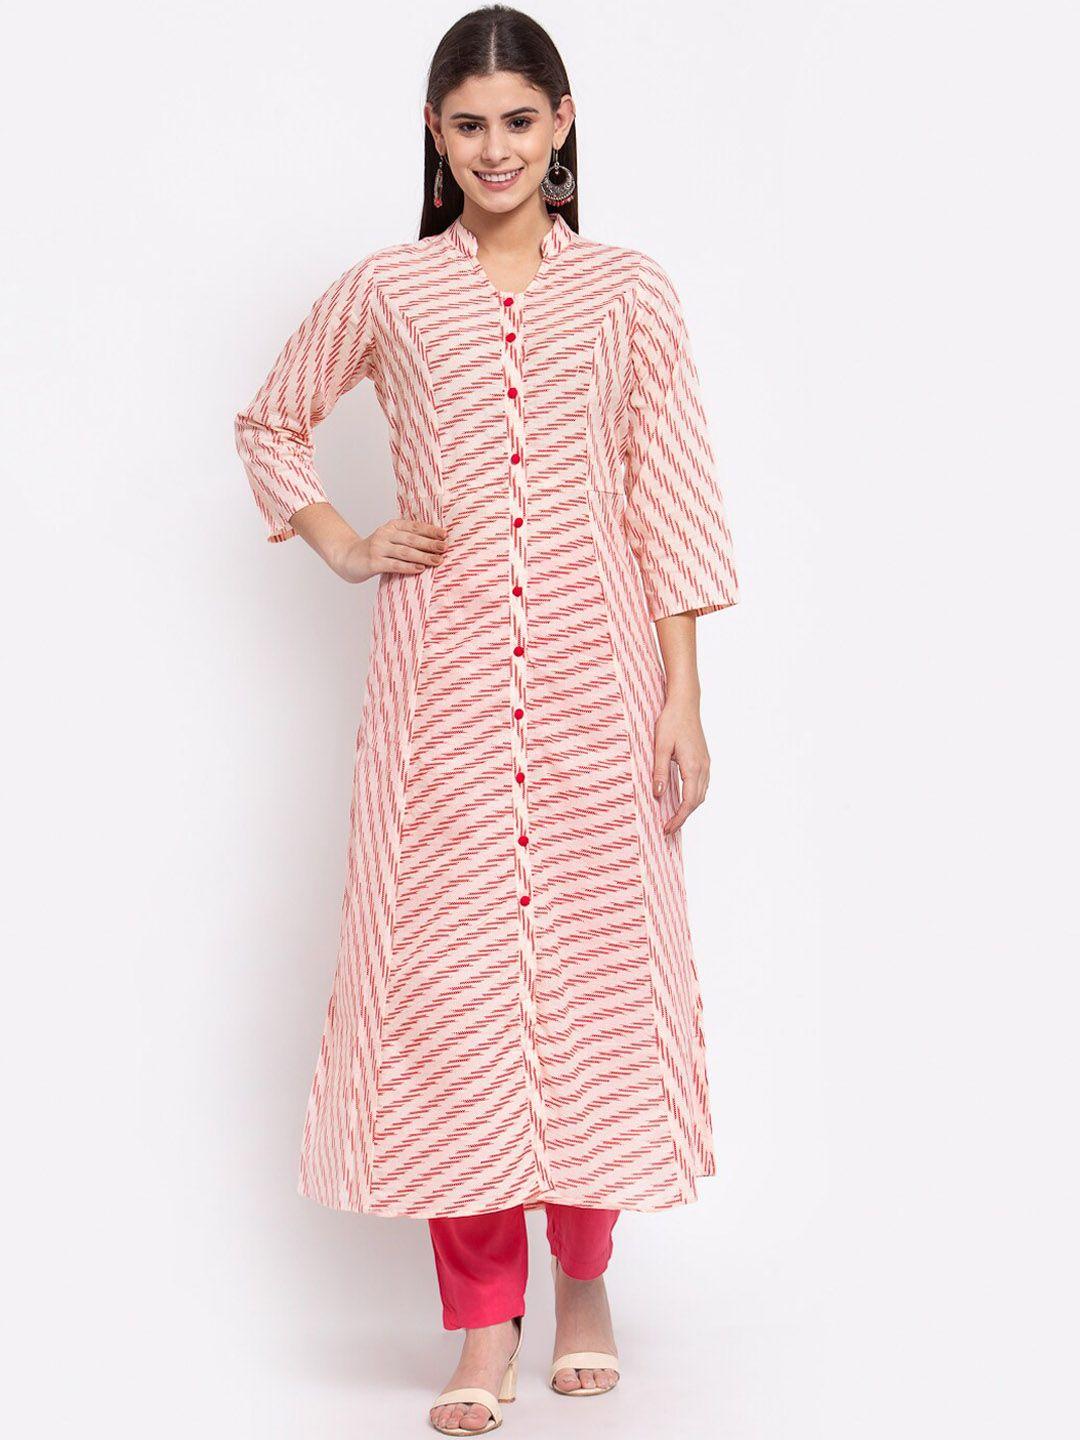 svarchi women pink & white striped kurta